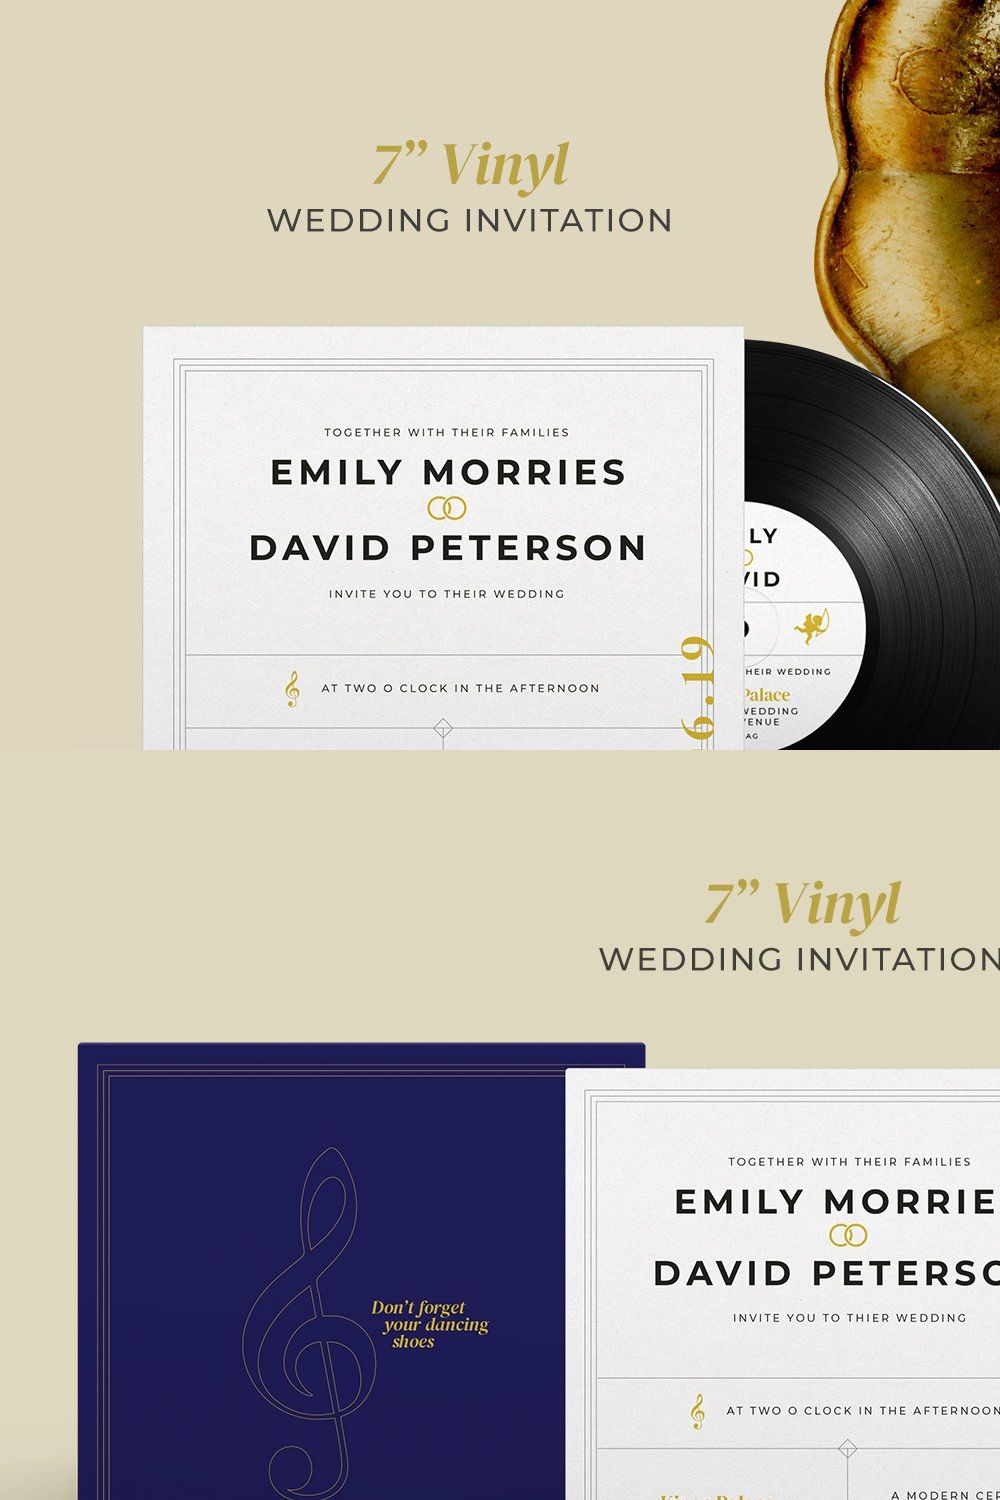 7" Vinyl Record Wedding Invitation pinterest preview image.